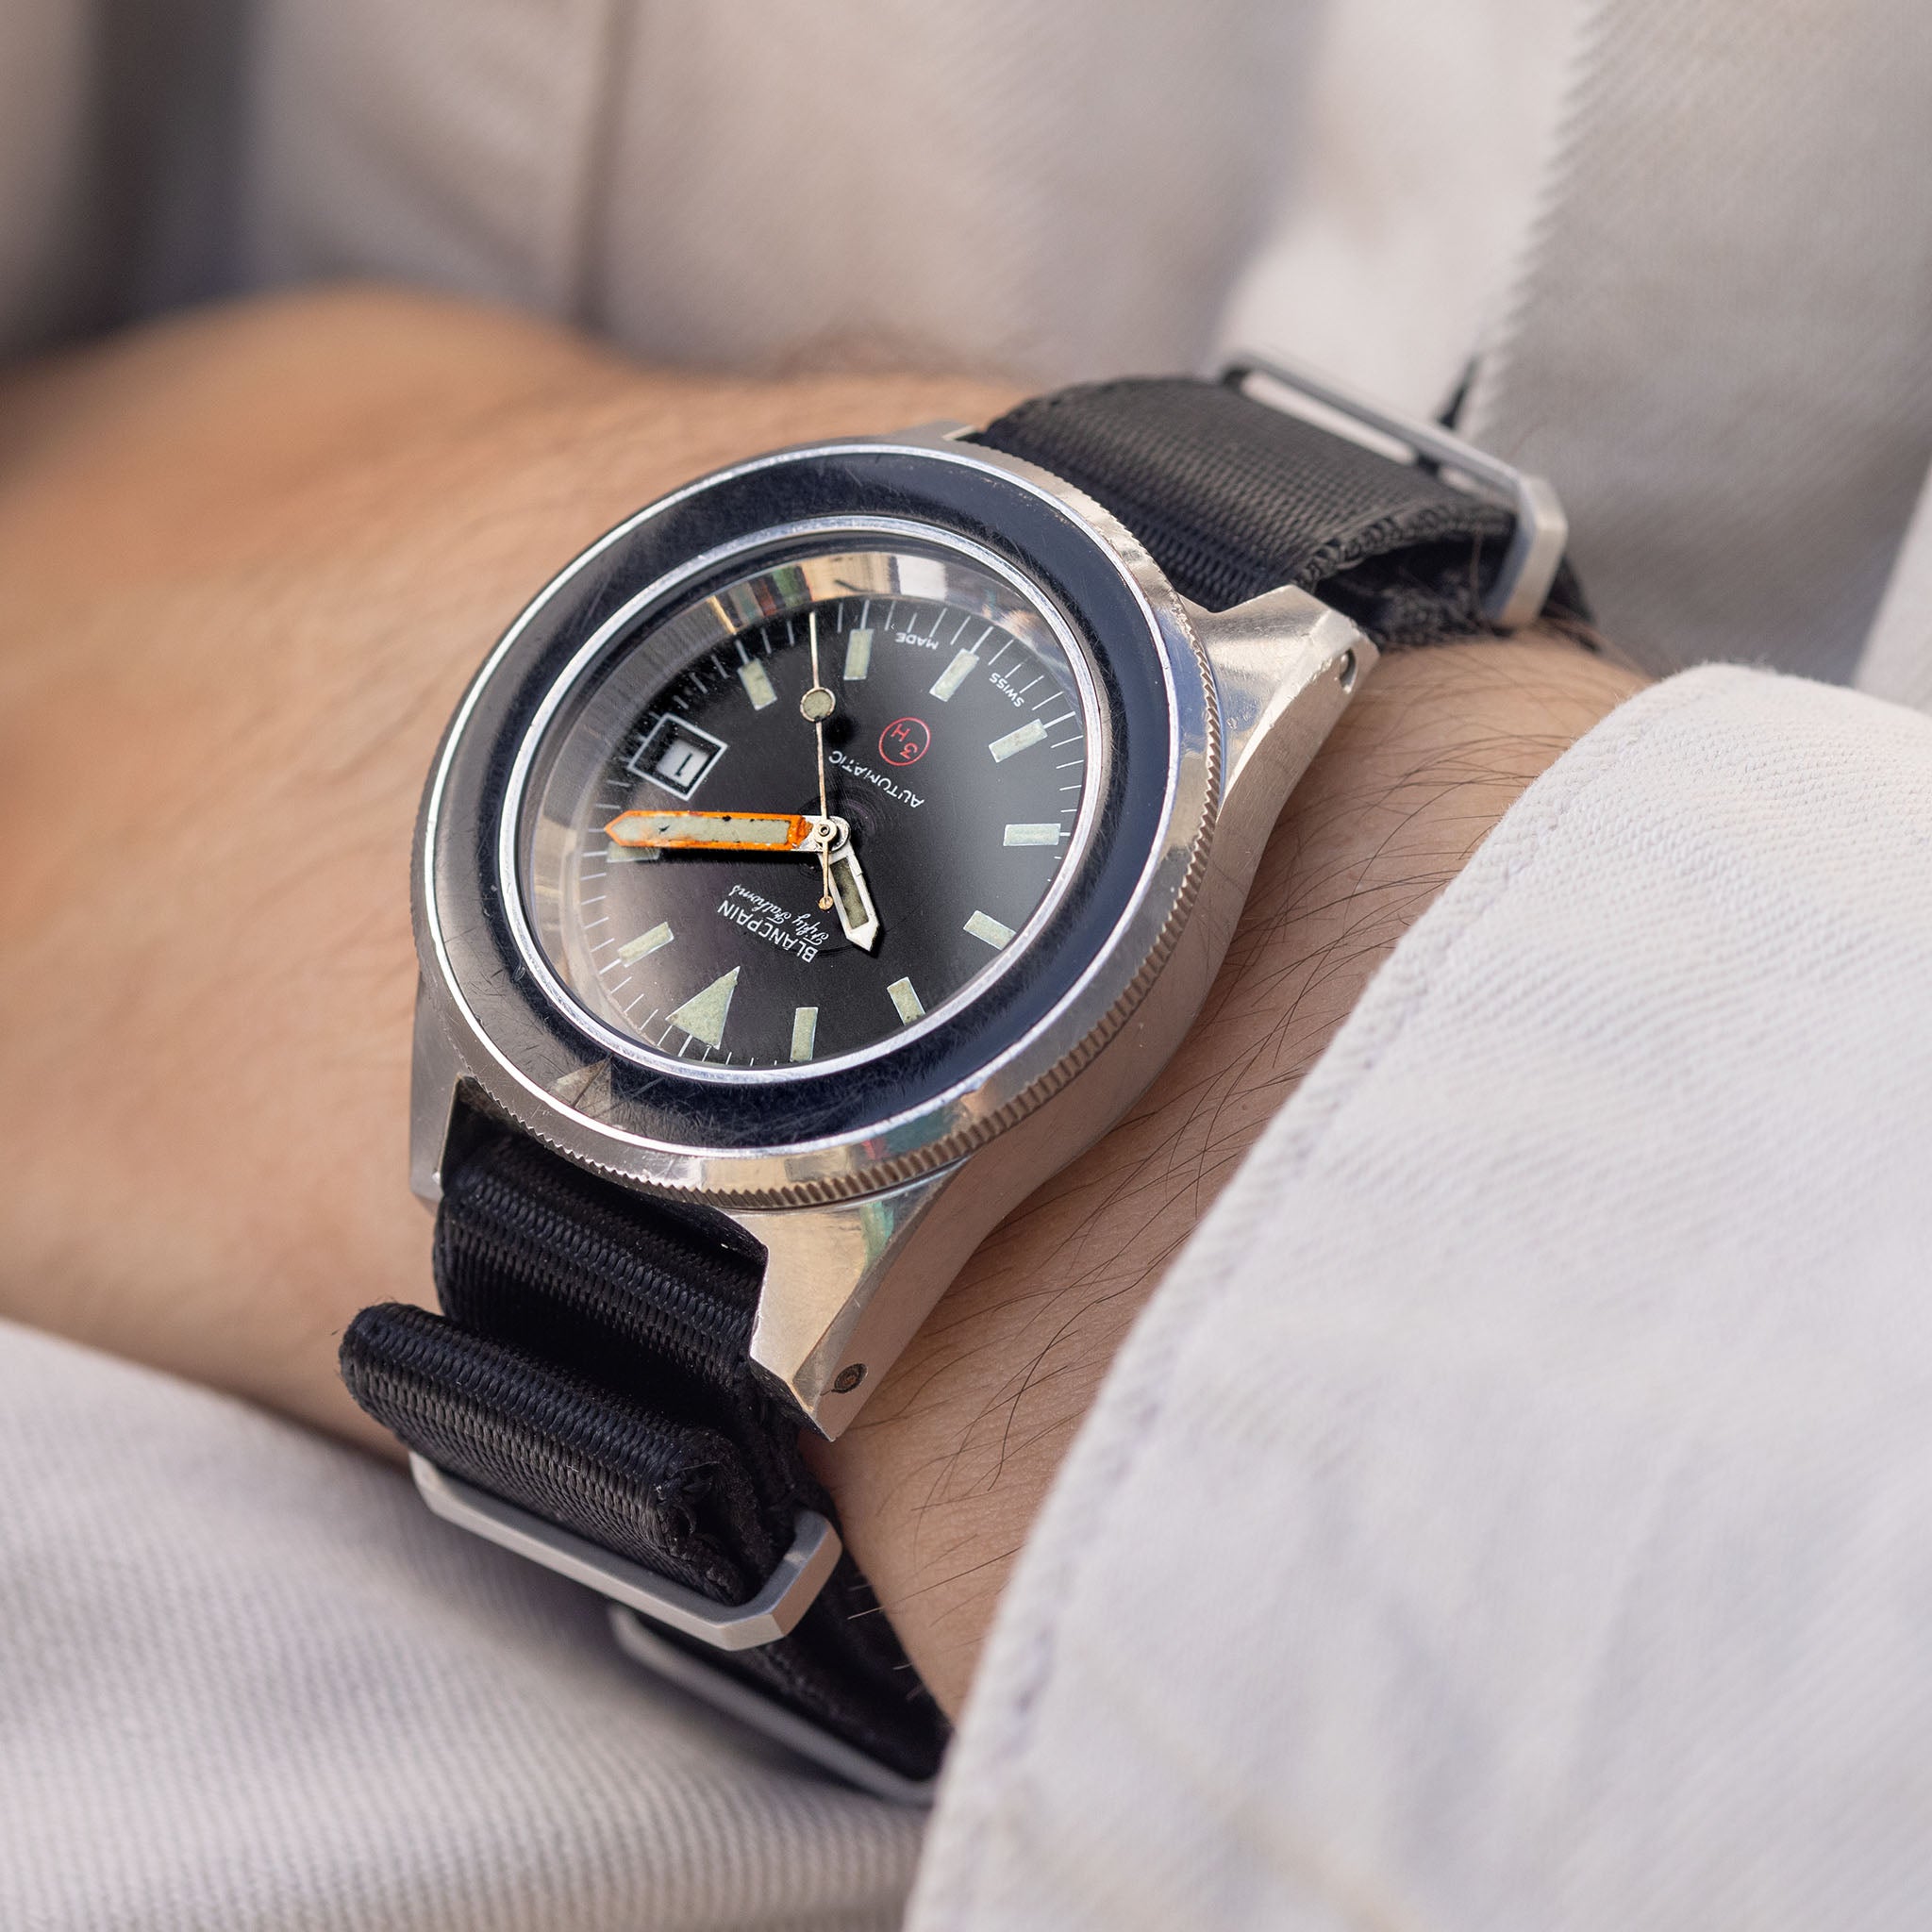 Blancpain Fifty Fathoms “Bund” Issued Dive Watch